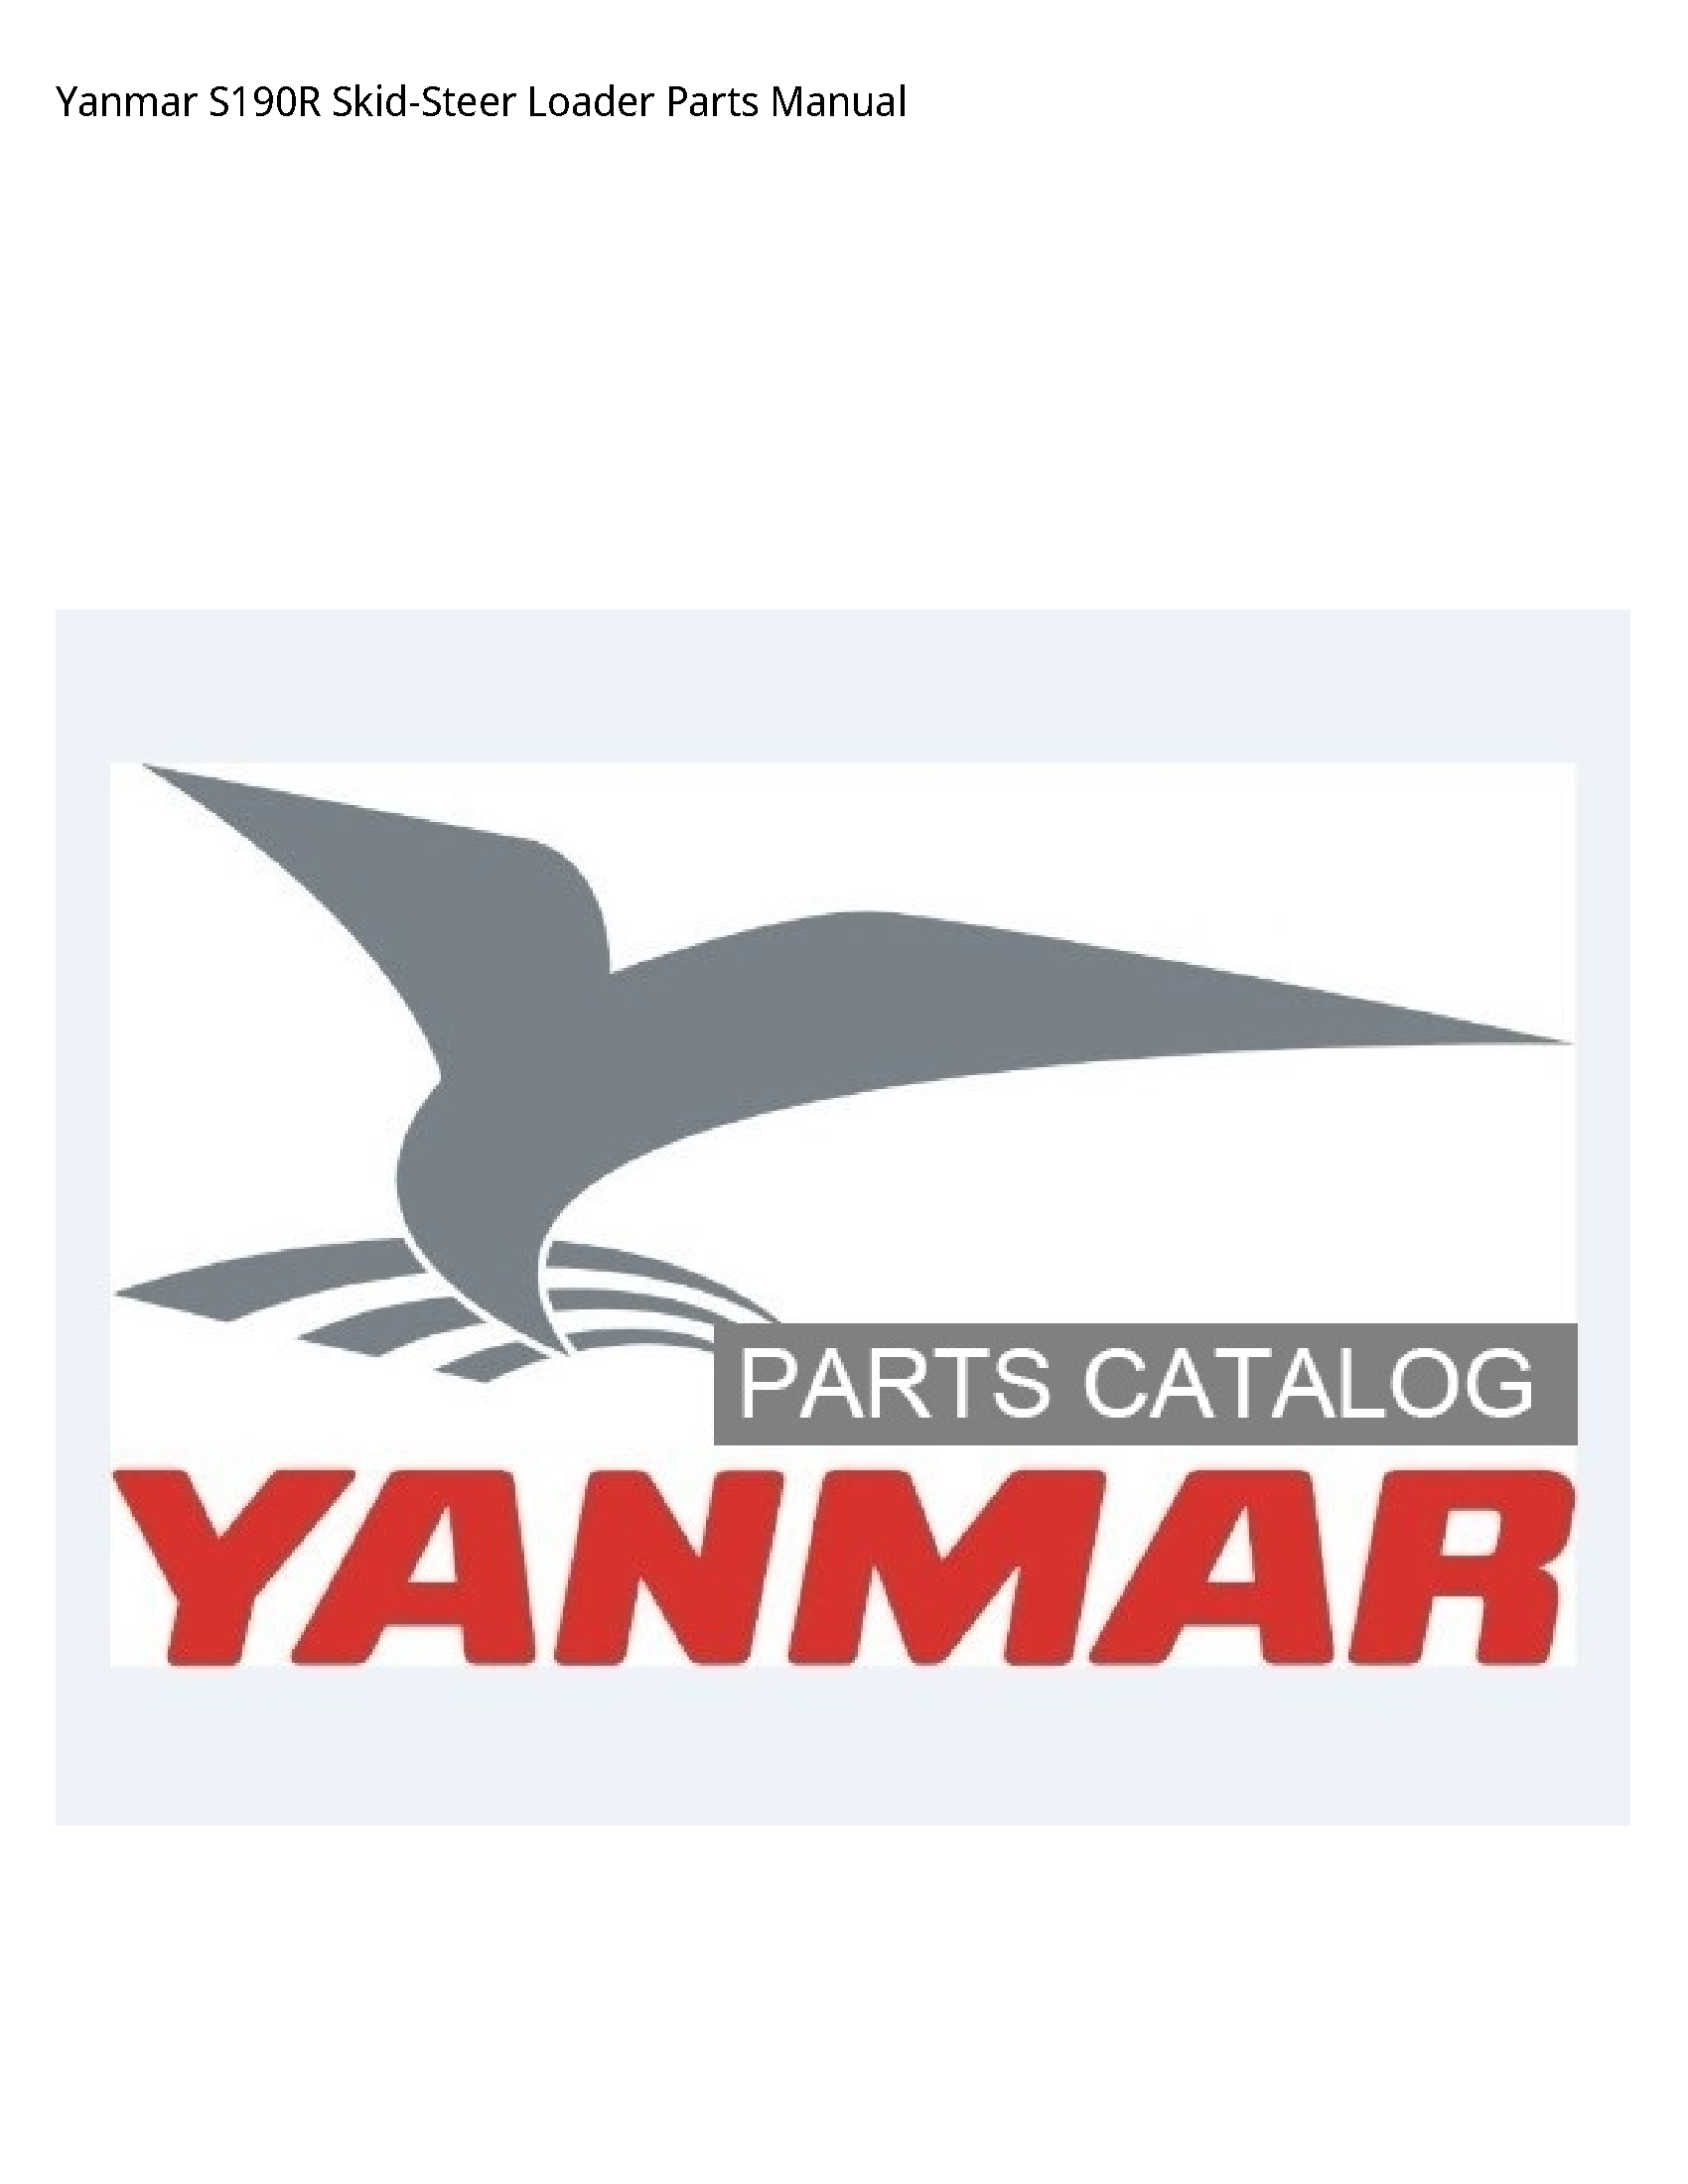 Yanmar S190R Skid-Steer Loader Parts manual